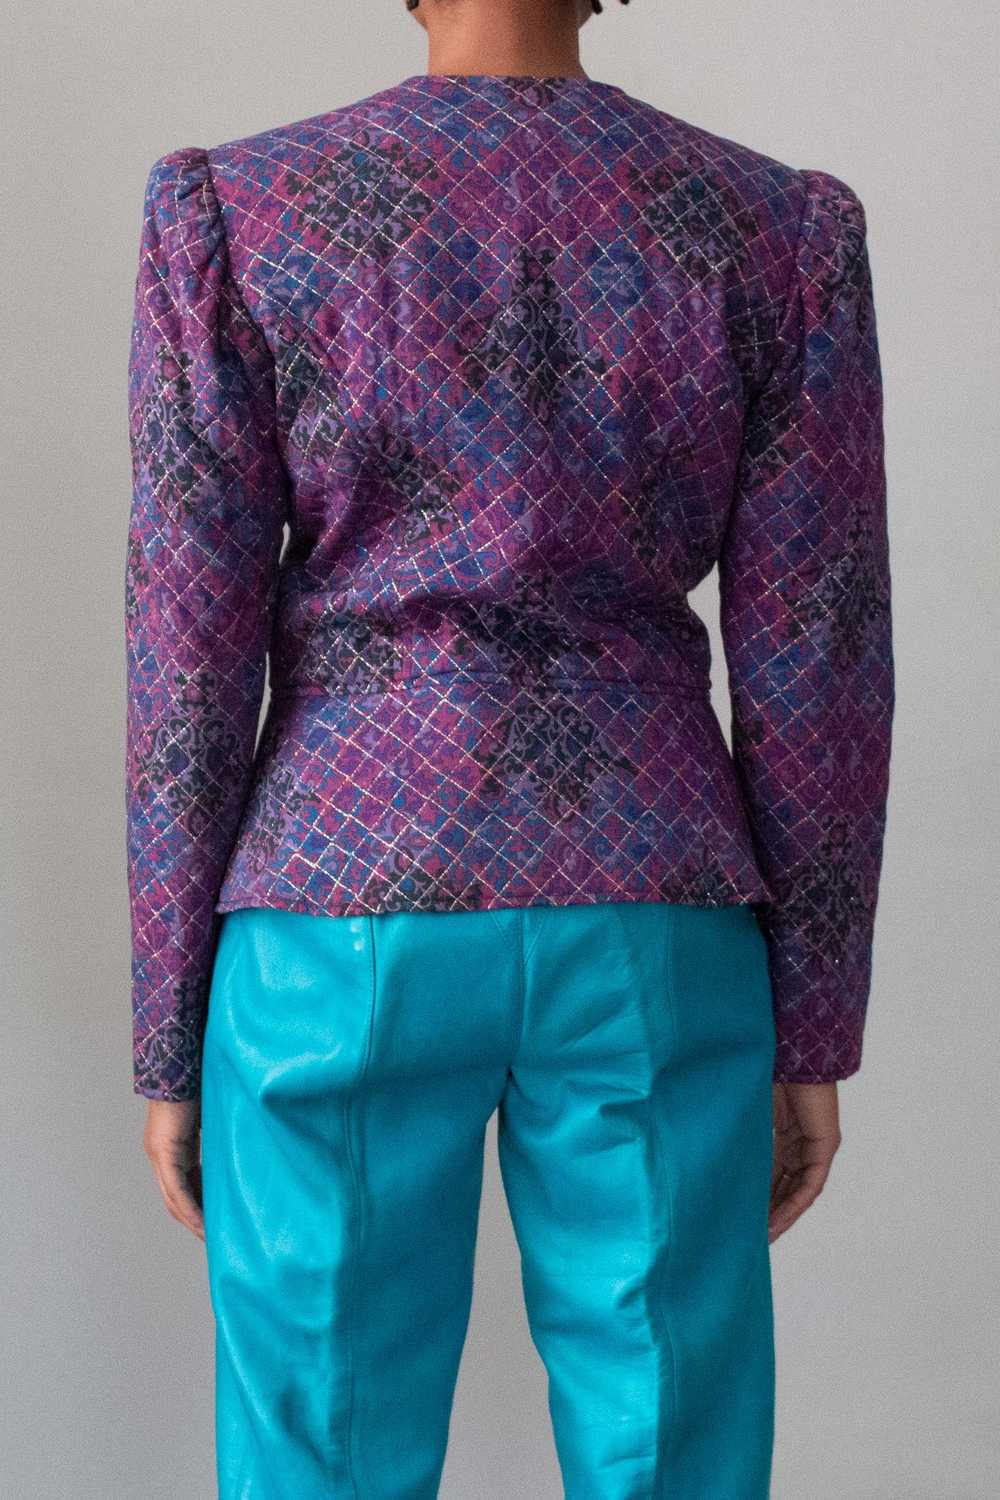 Saint Laurent Purple Paisley Wool Blazer - image 5